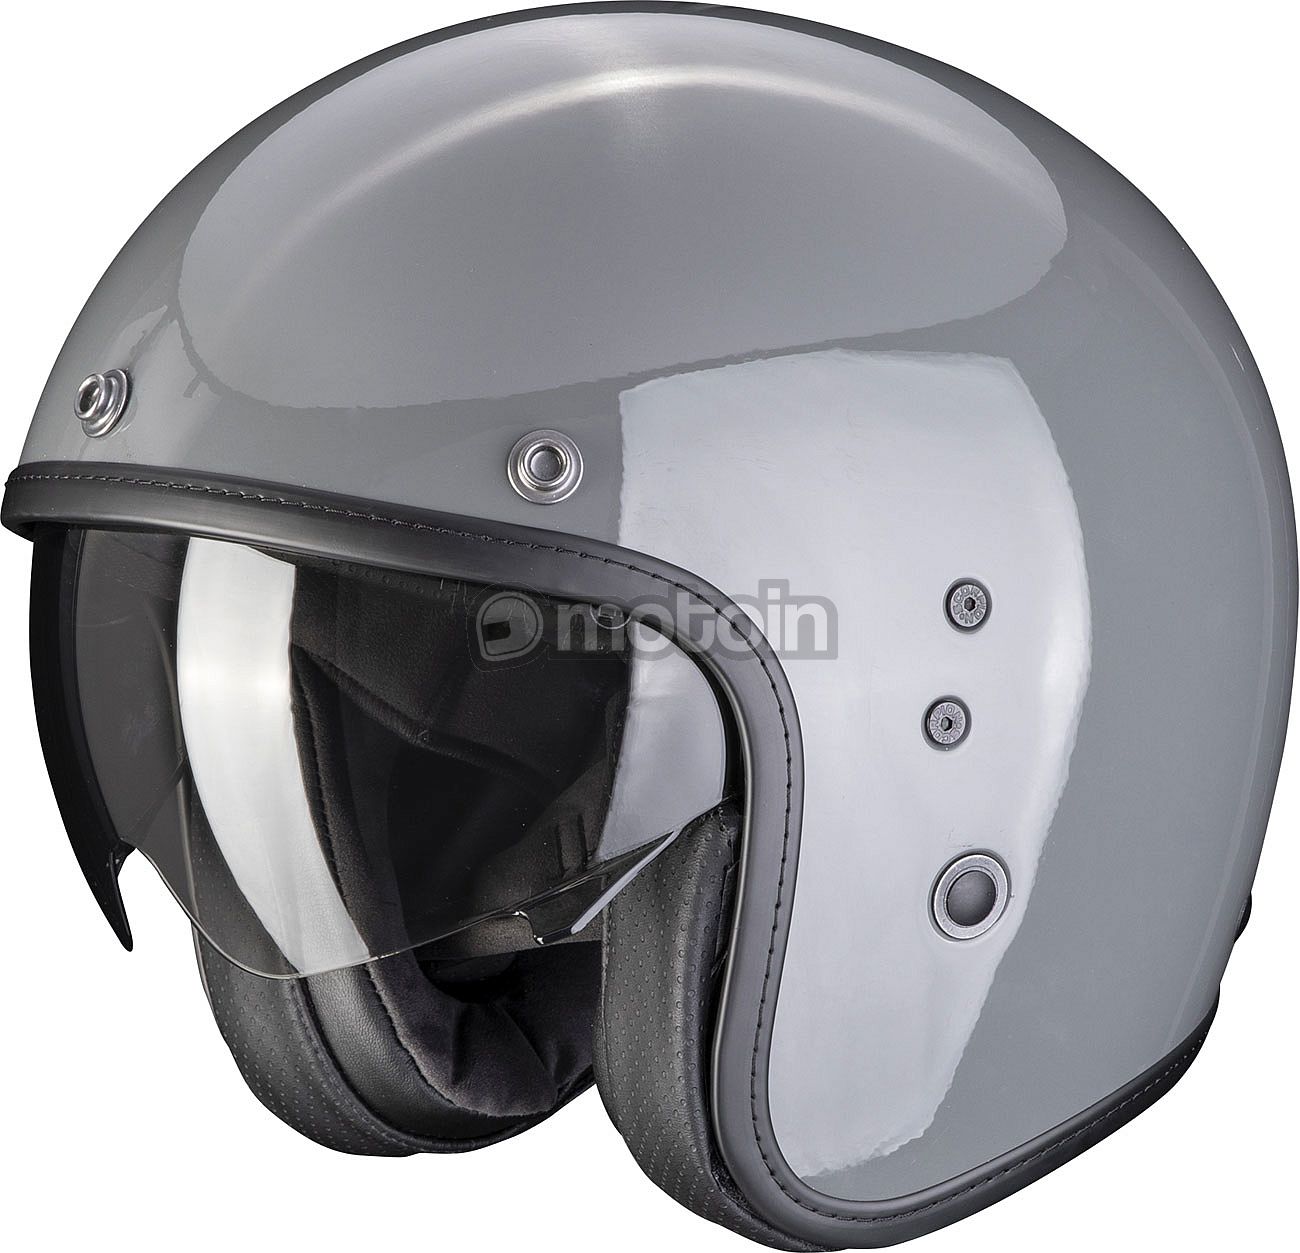 Scorpion Belfast Evo Solid, open face helmet